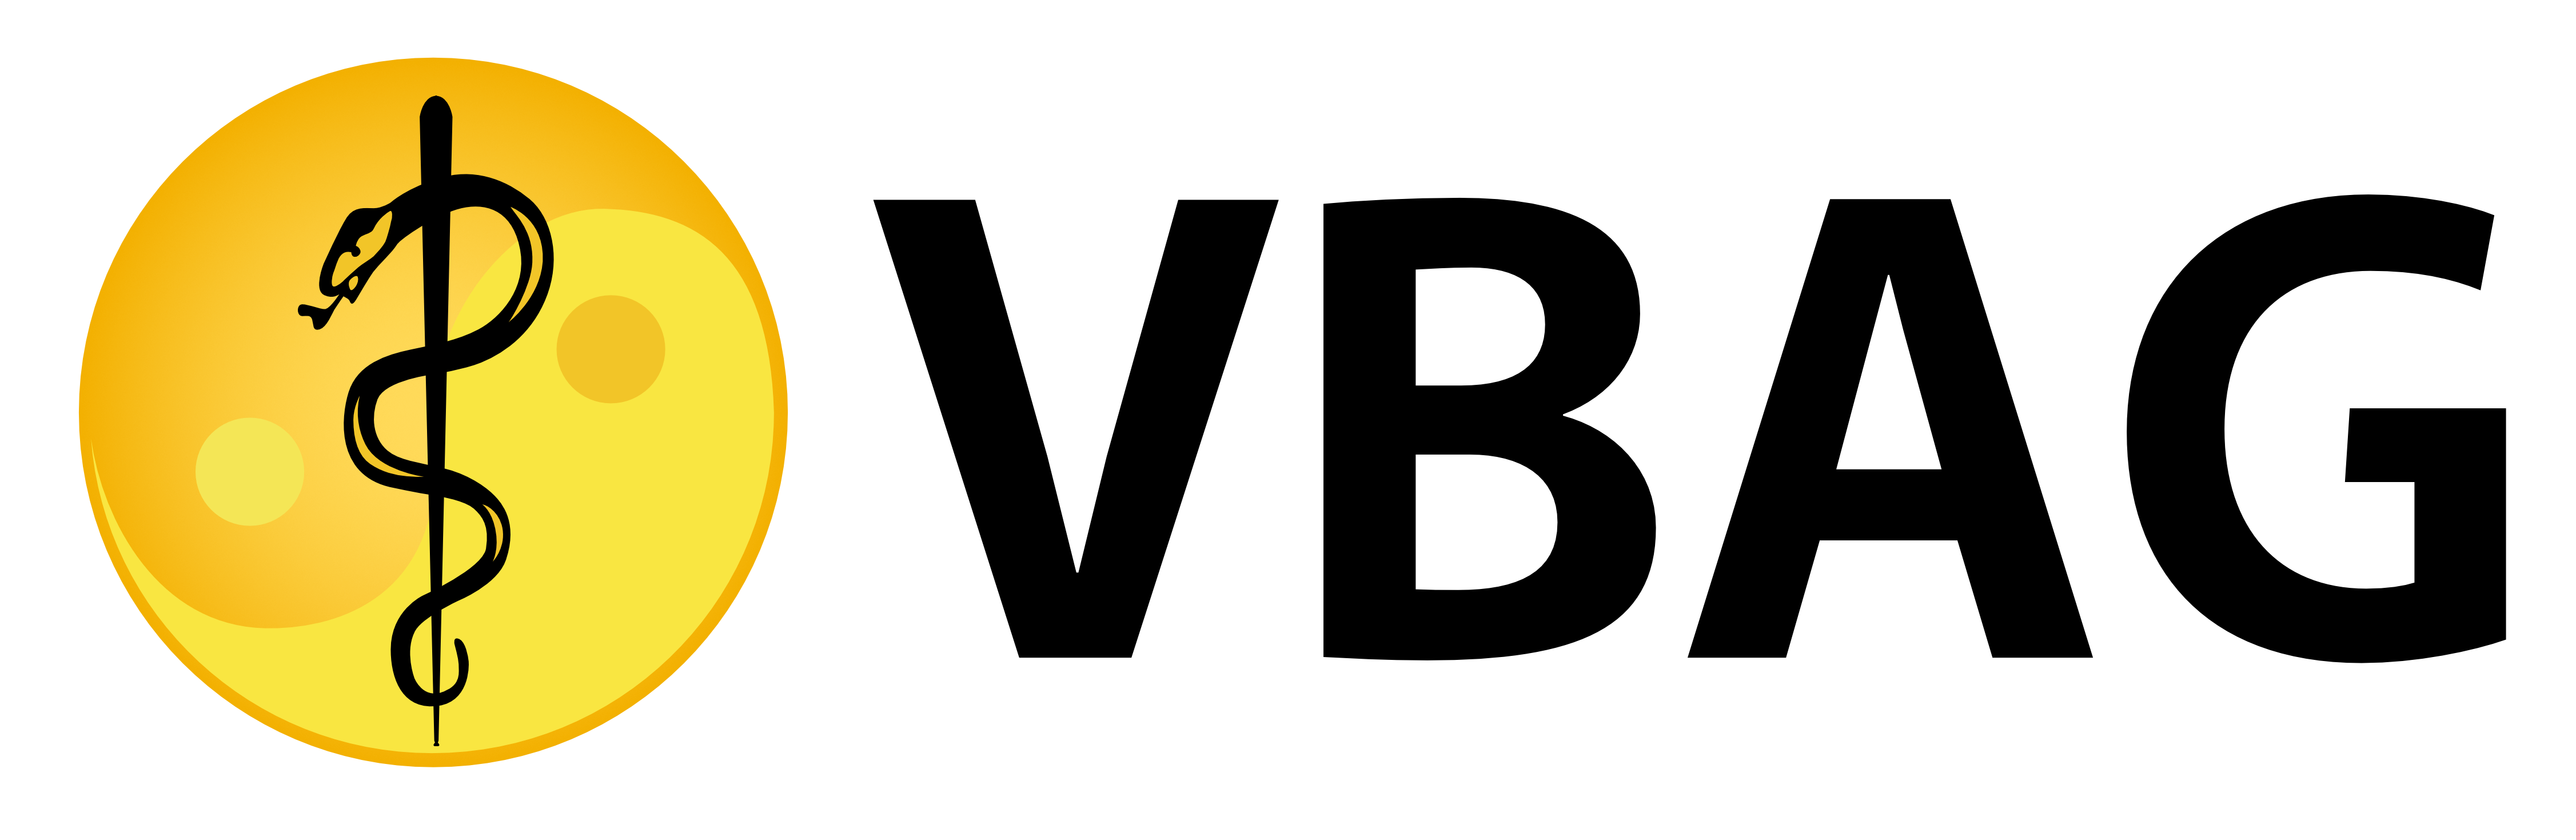 VBAG logo zwarte letters TP a533f